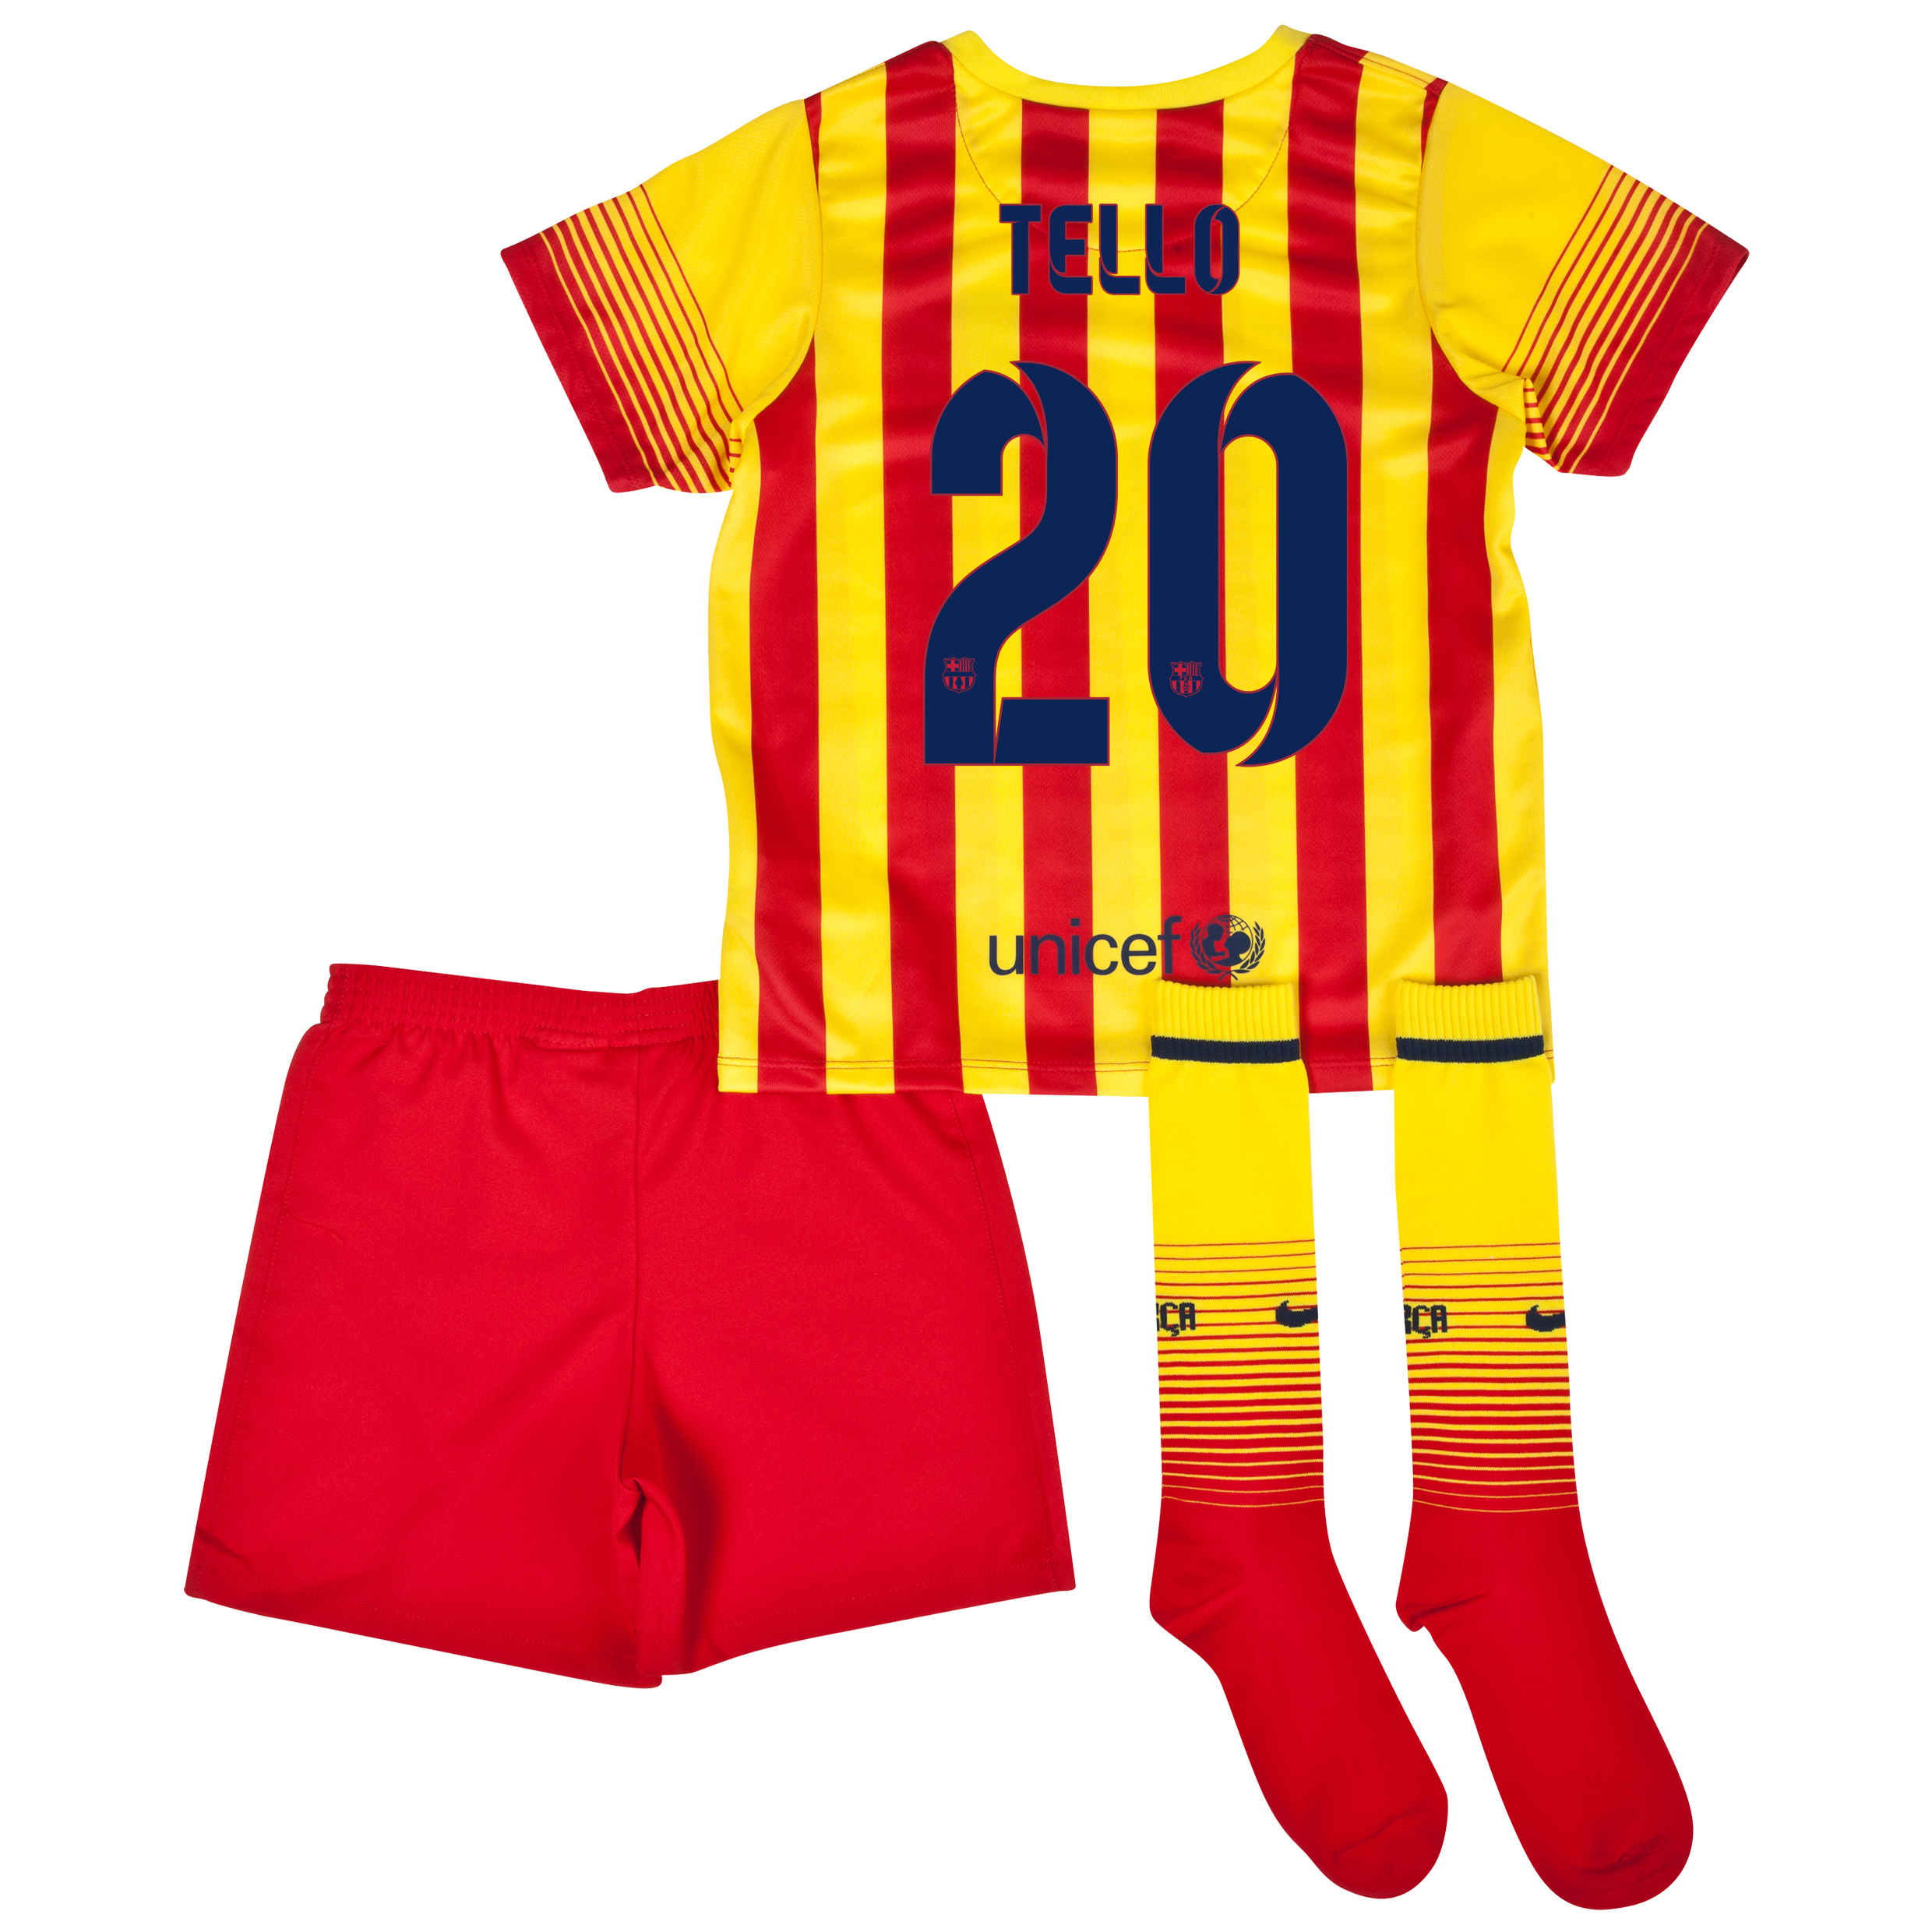 Barcelona Away Kit 2013/14 - Little Boys with Tello 20 printing